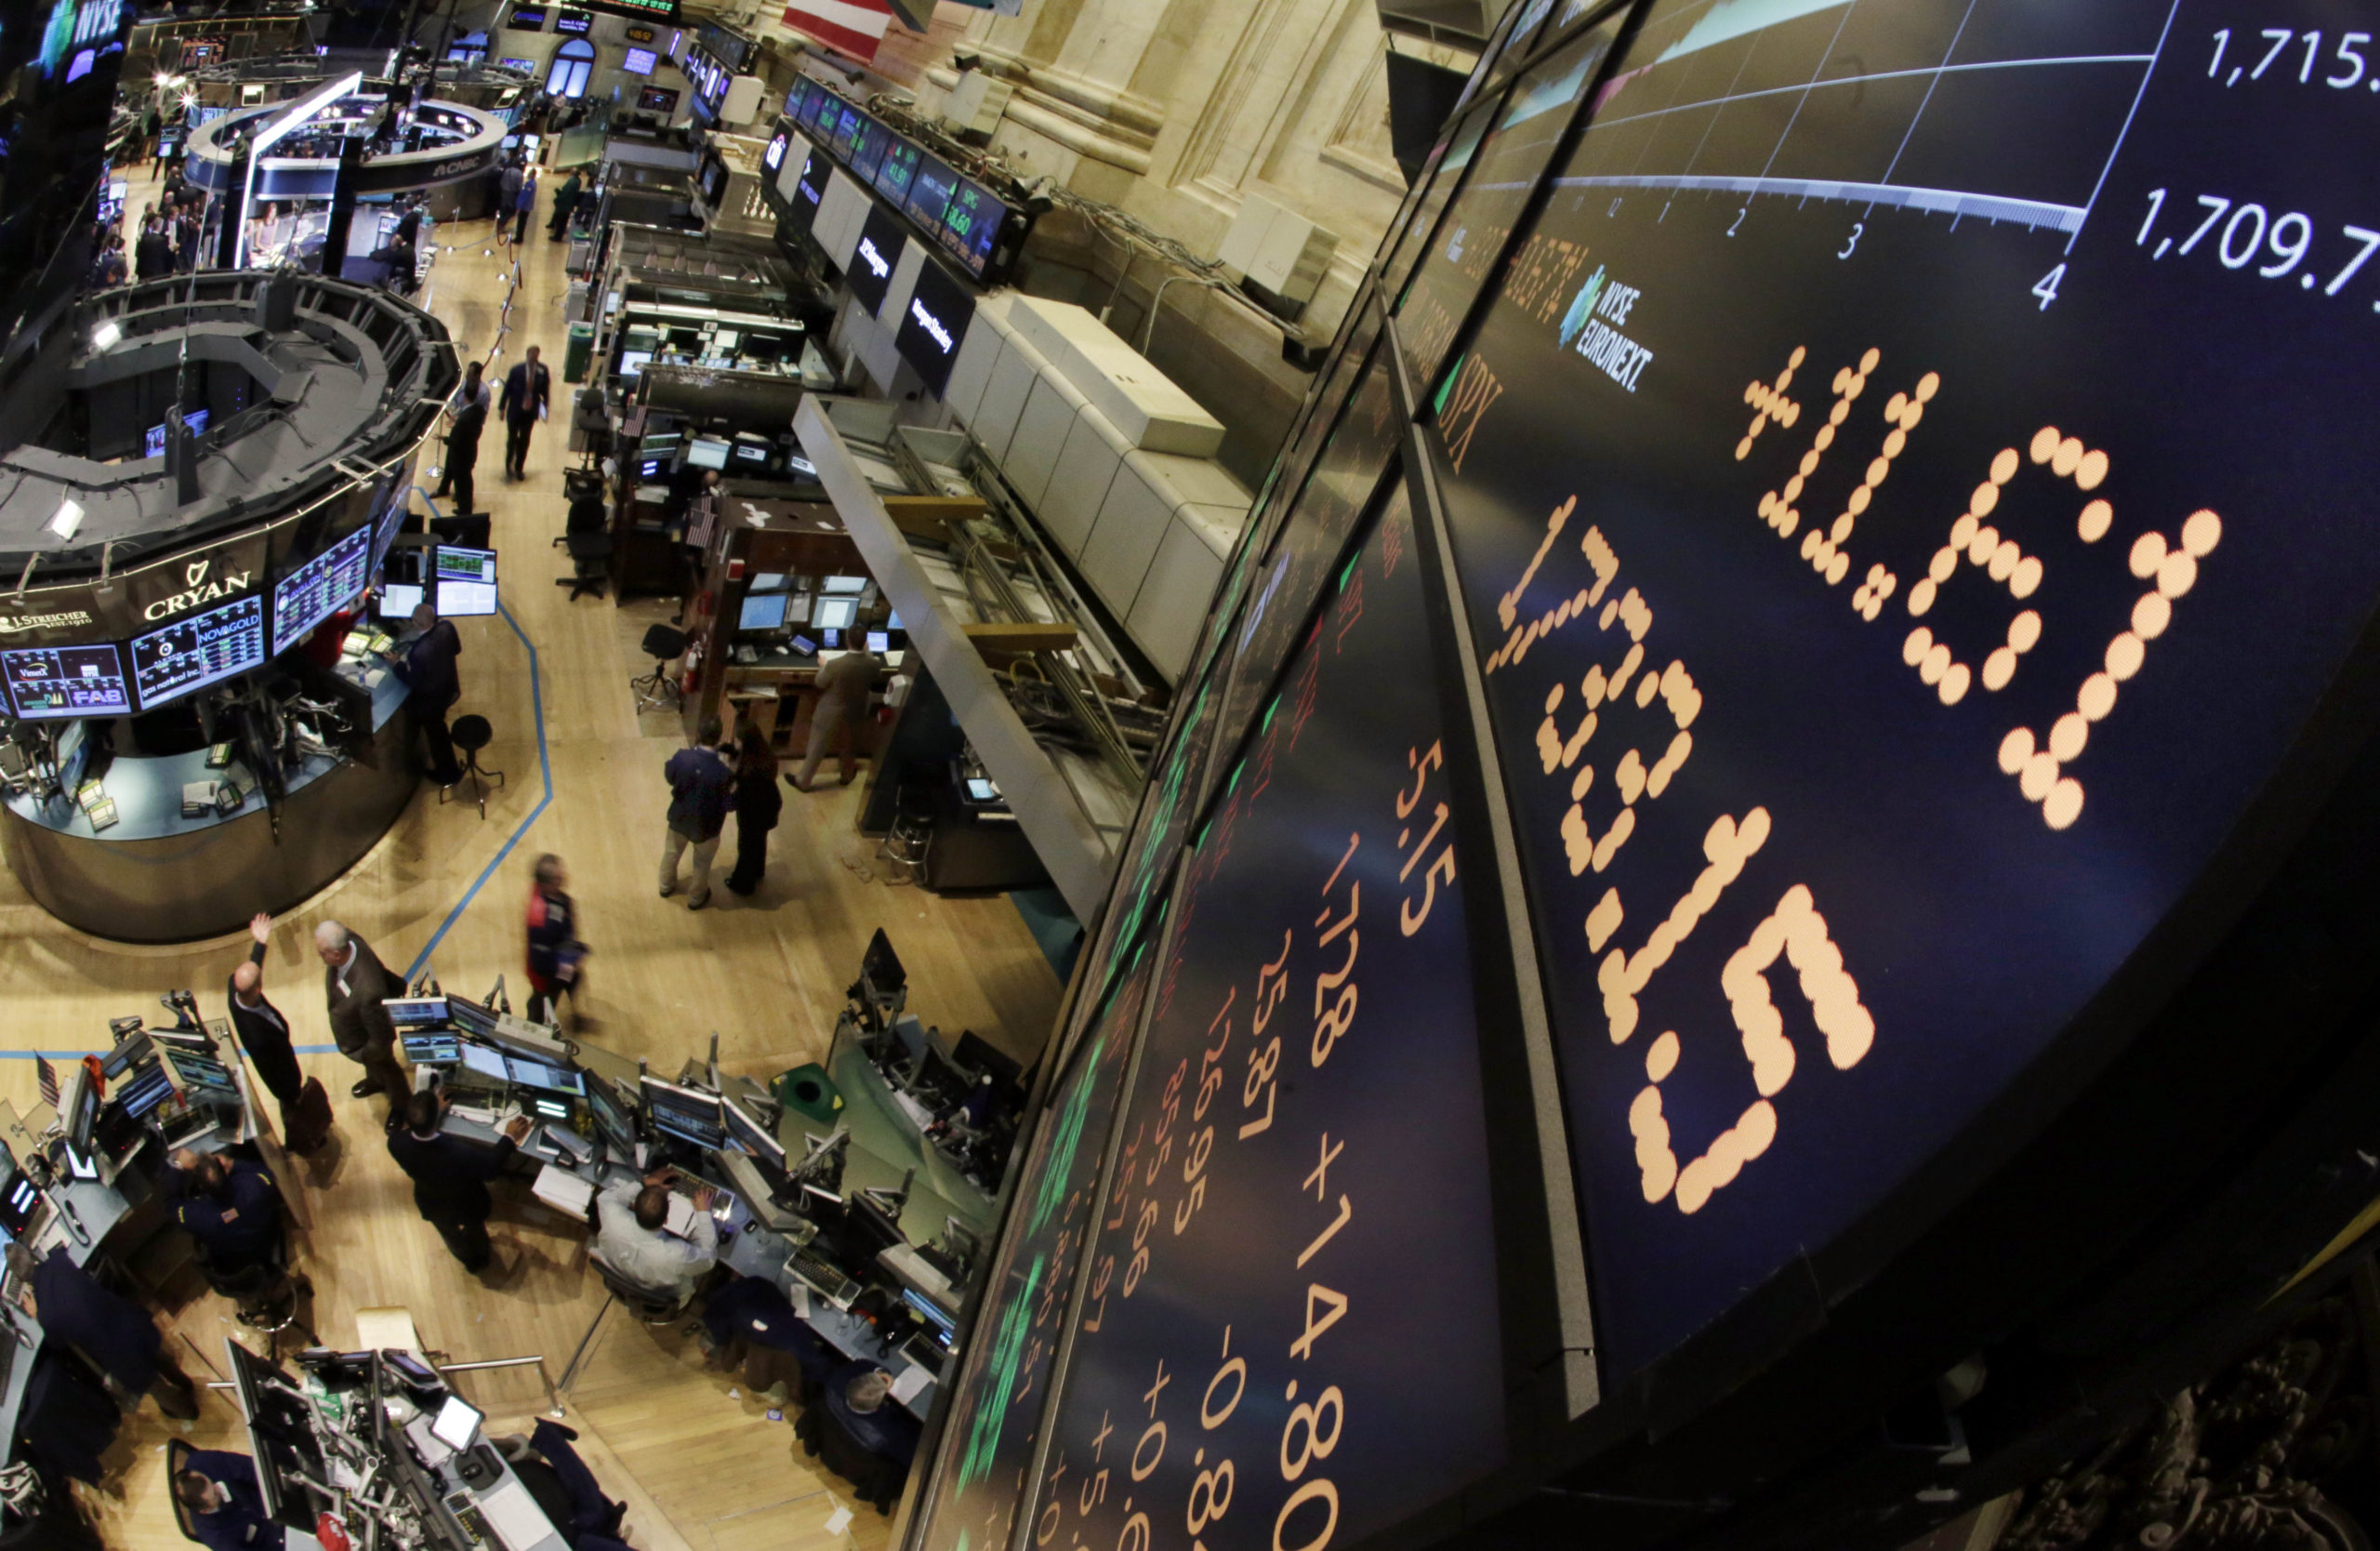 Wall Street: Έκλεισε με πτώση